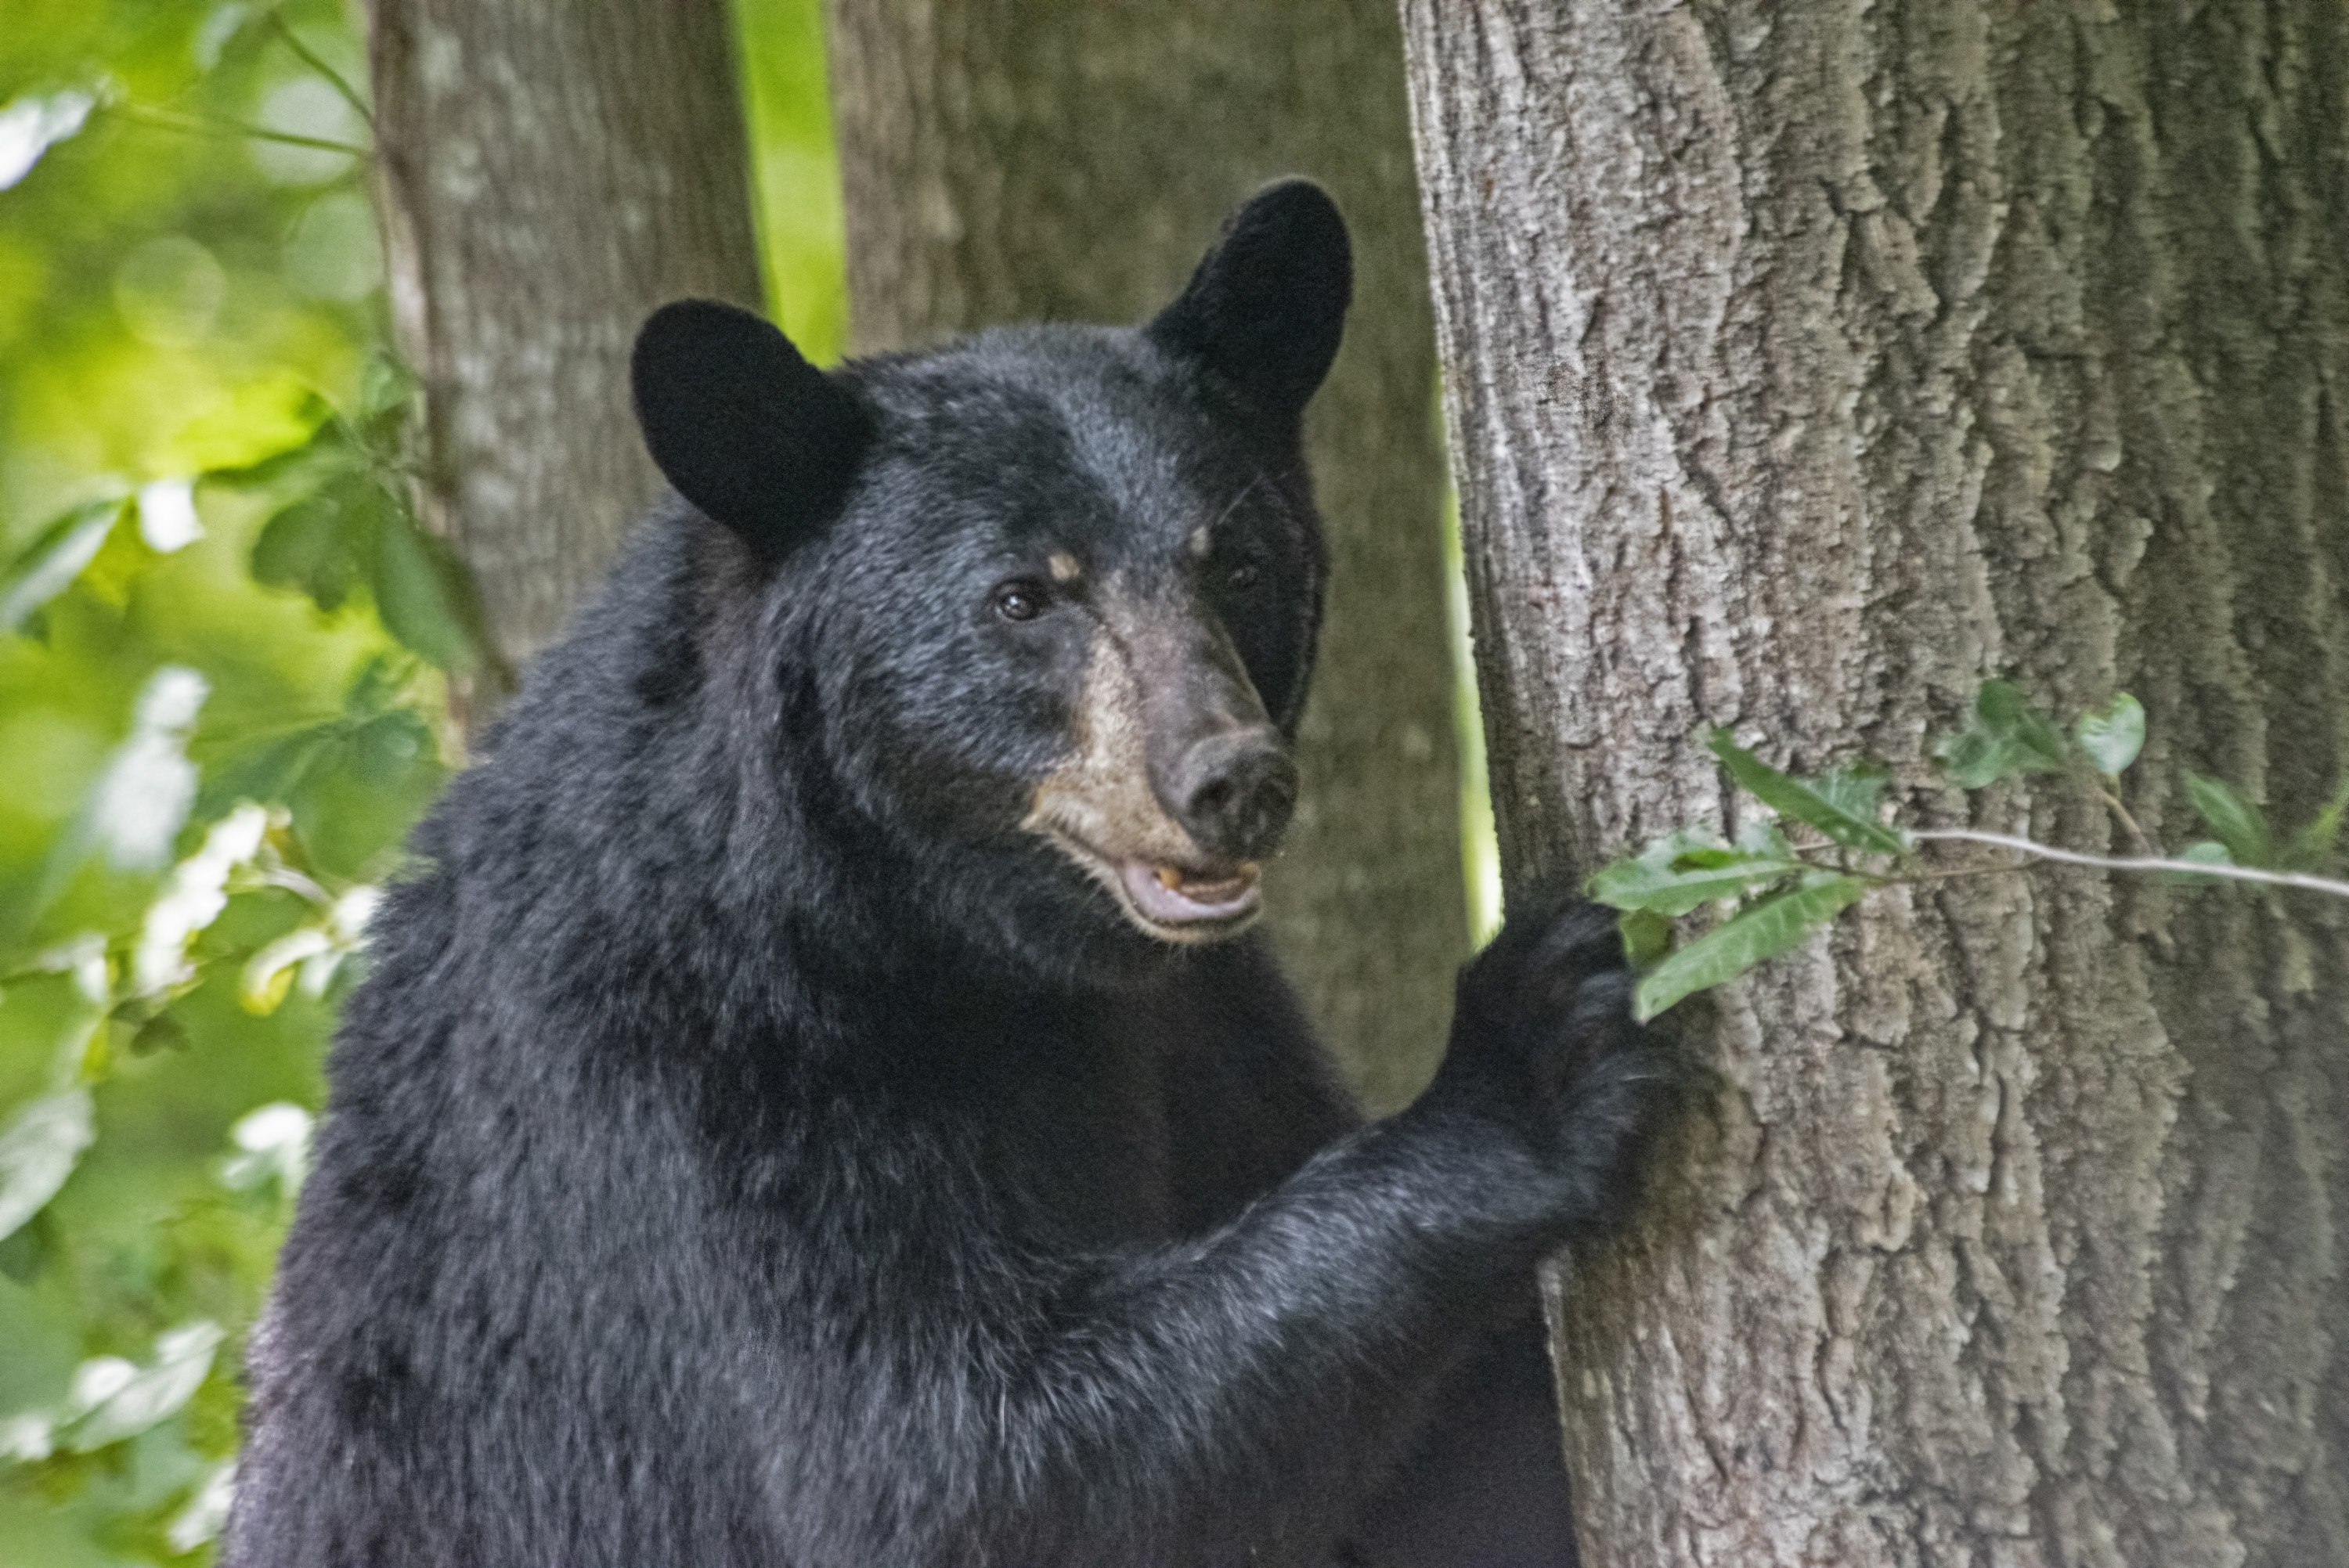 Black bear standing next to a tree